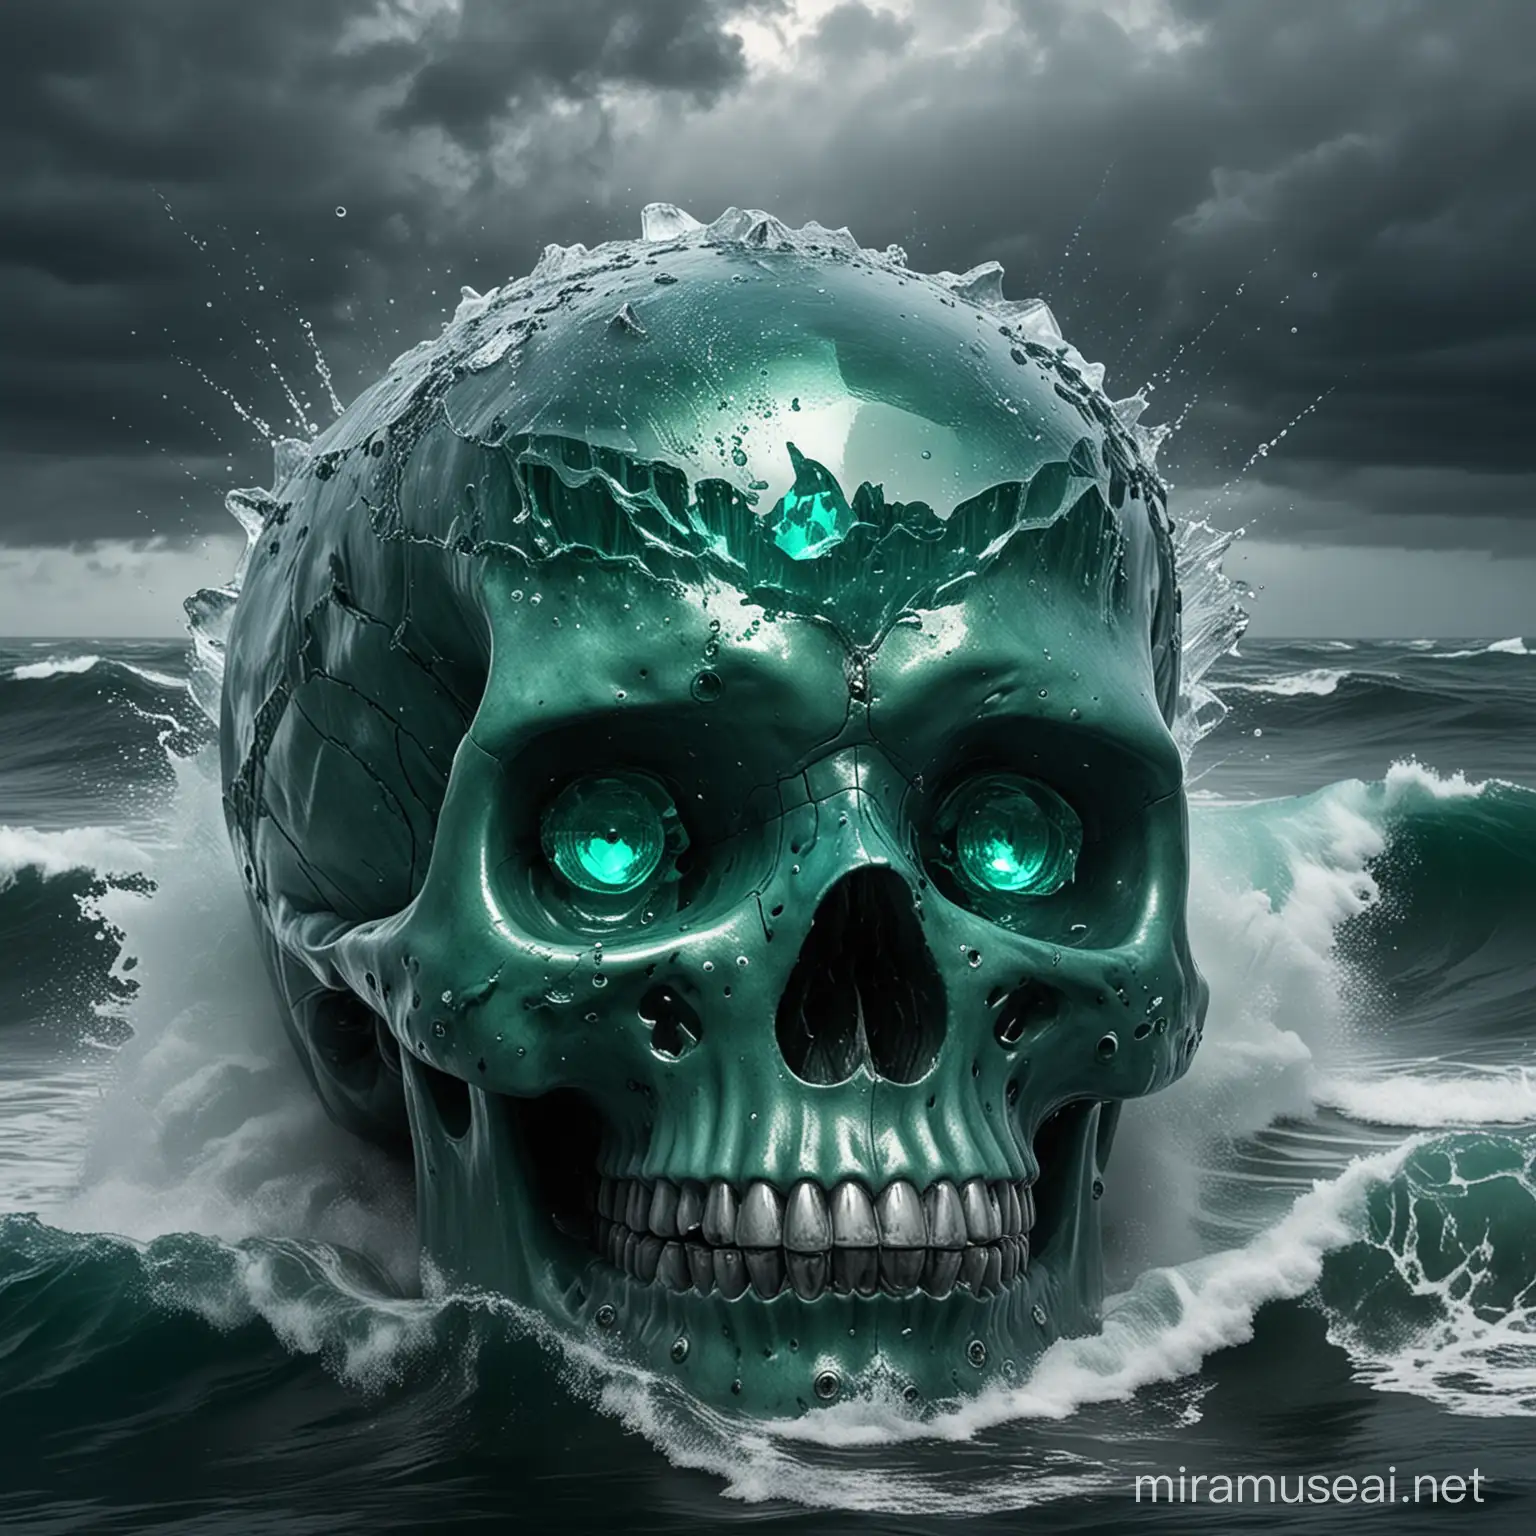 Mystical Crystal Skull with Emerald Eyes Amidst Ferocious Ocean Storm